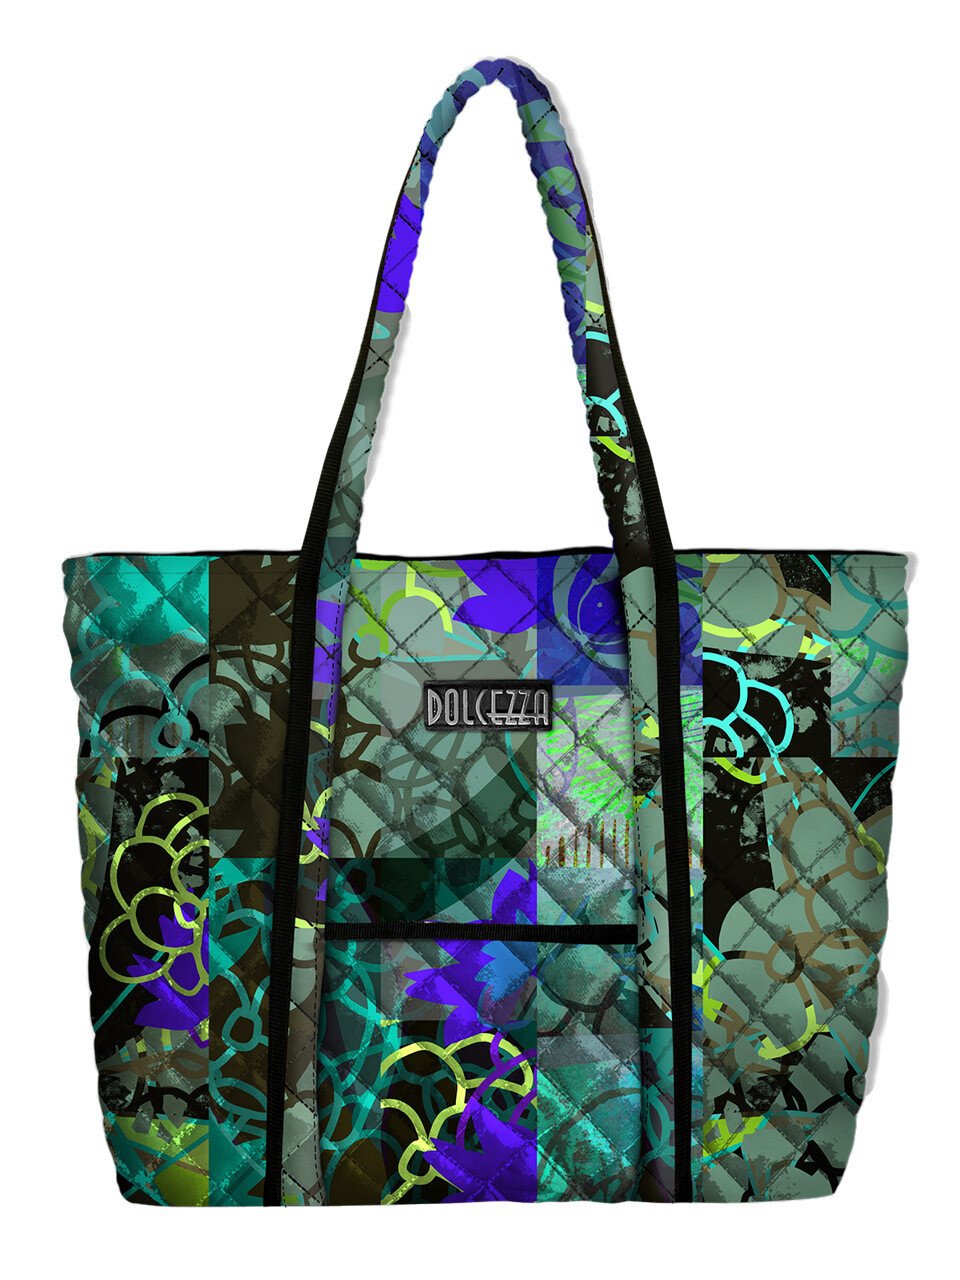 Simply Art Dolcezza: Digital Geometry Plush Tote Bag